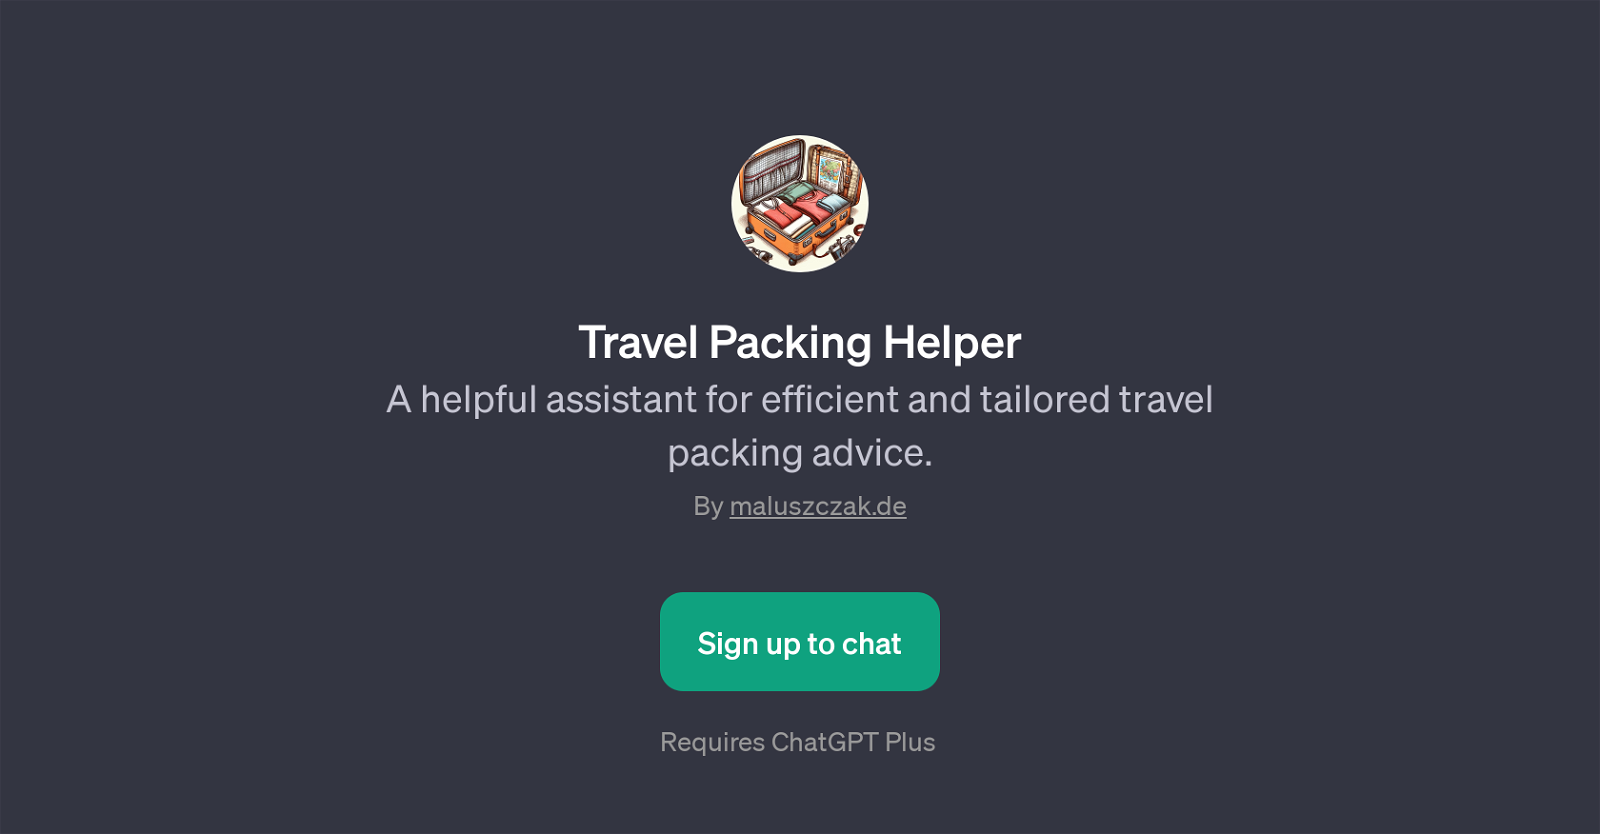 Travel Packing Helper website